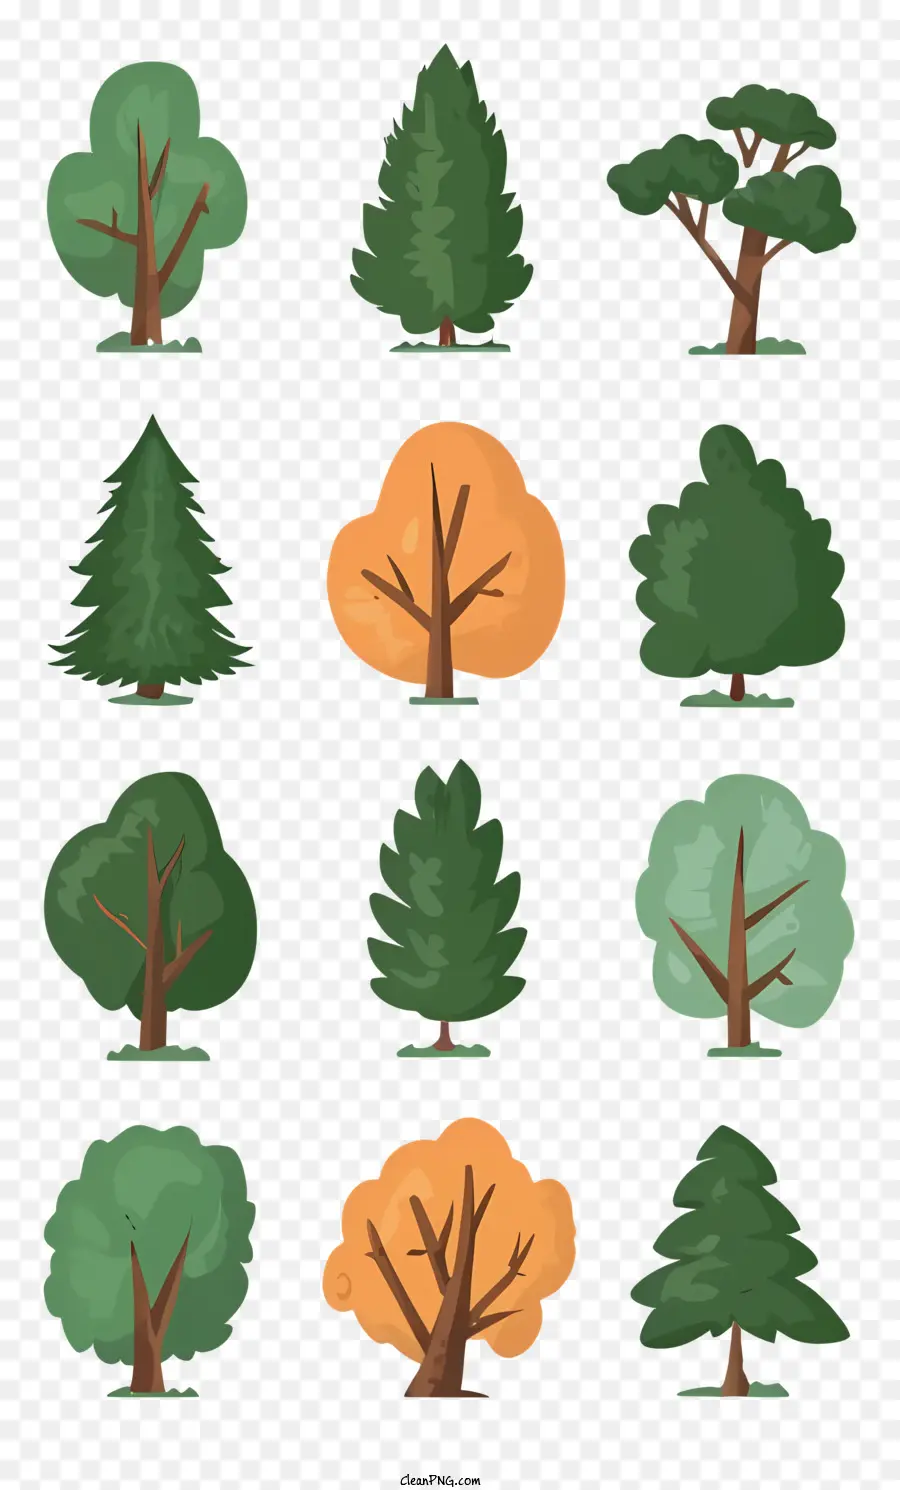 Bäume Formengrößen Farben Nadelbäume - Verschiedene Bäume in verschiedenen Formen, Farben, Größen